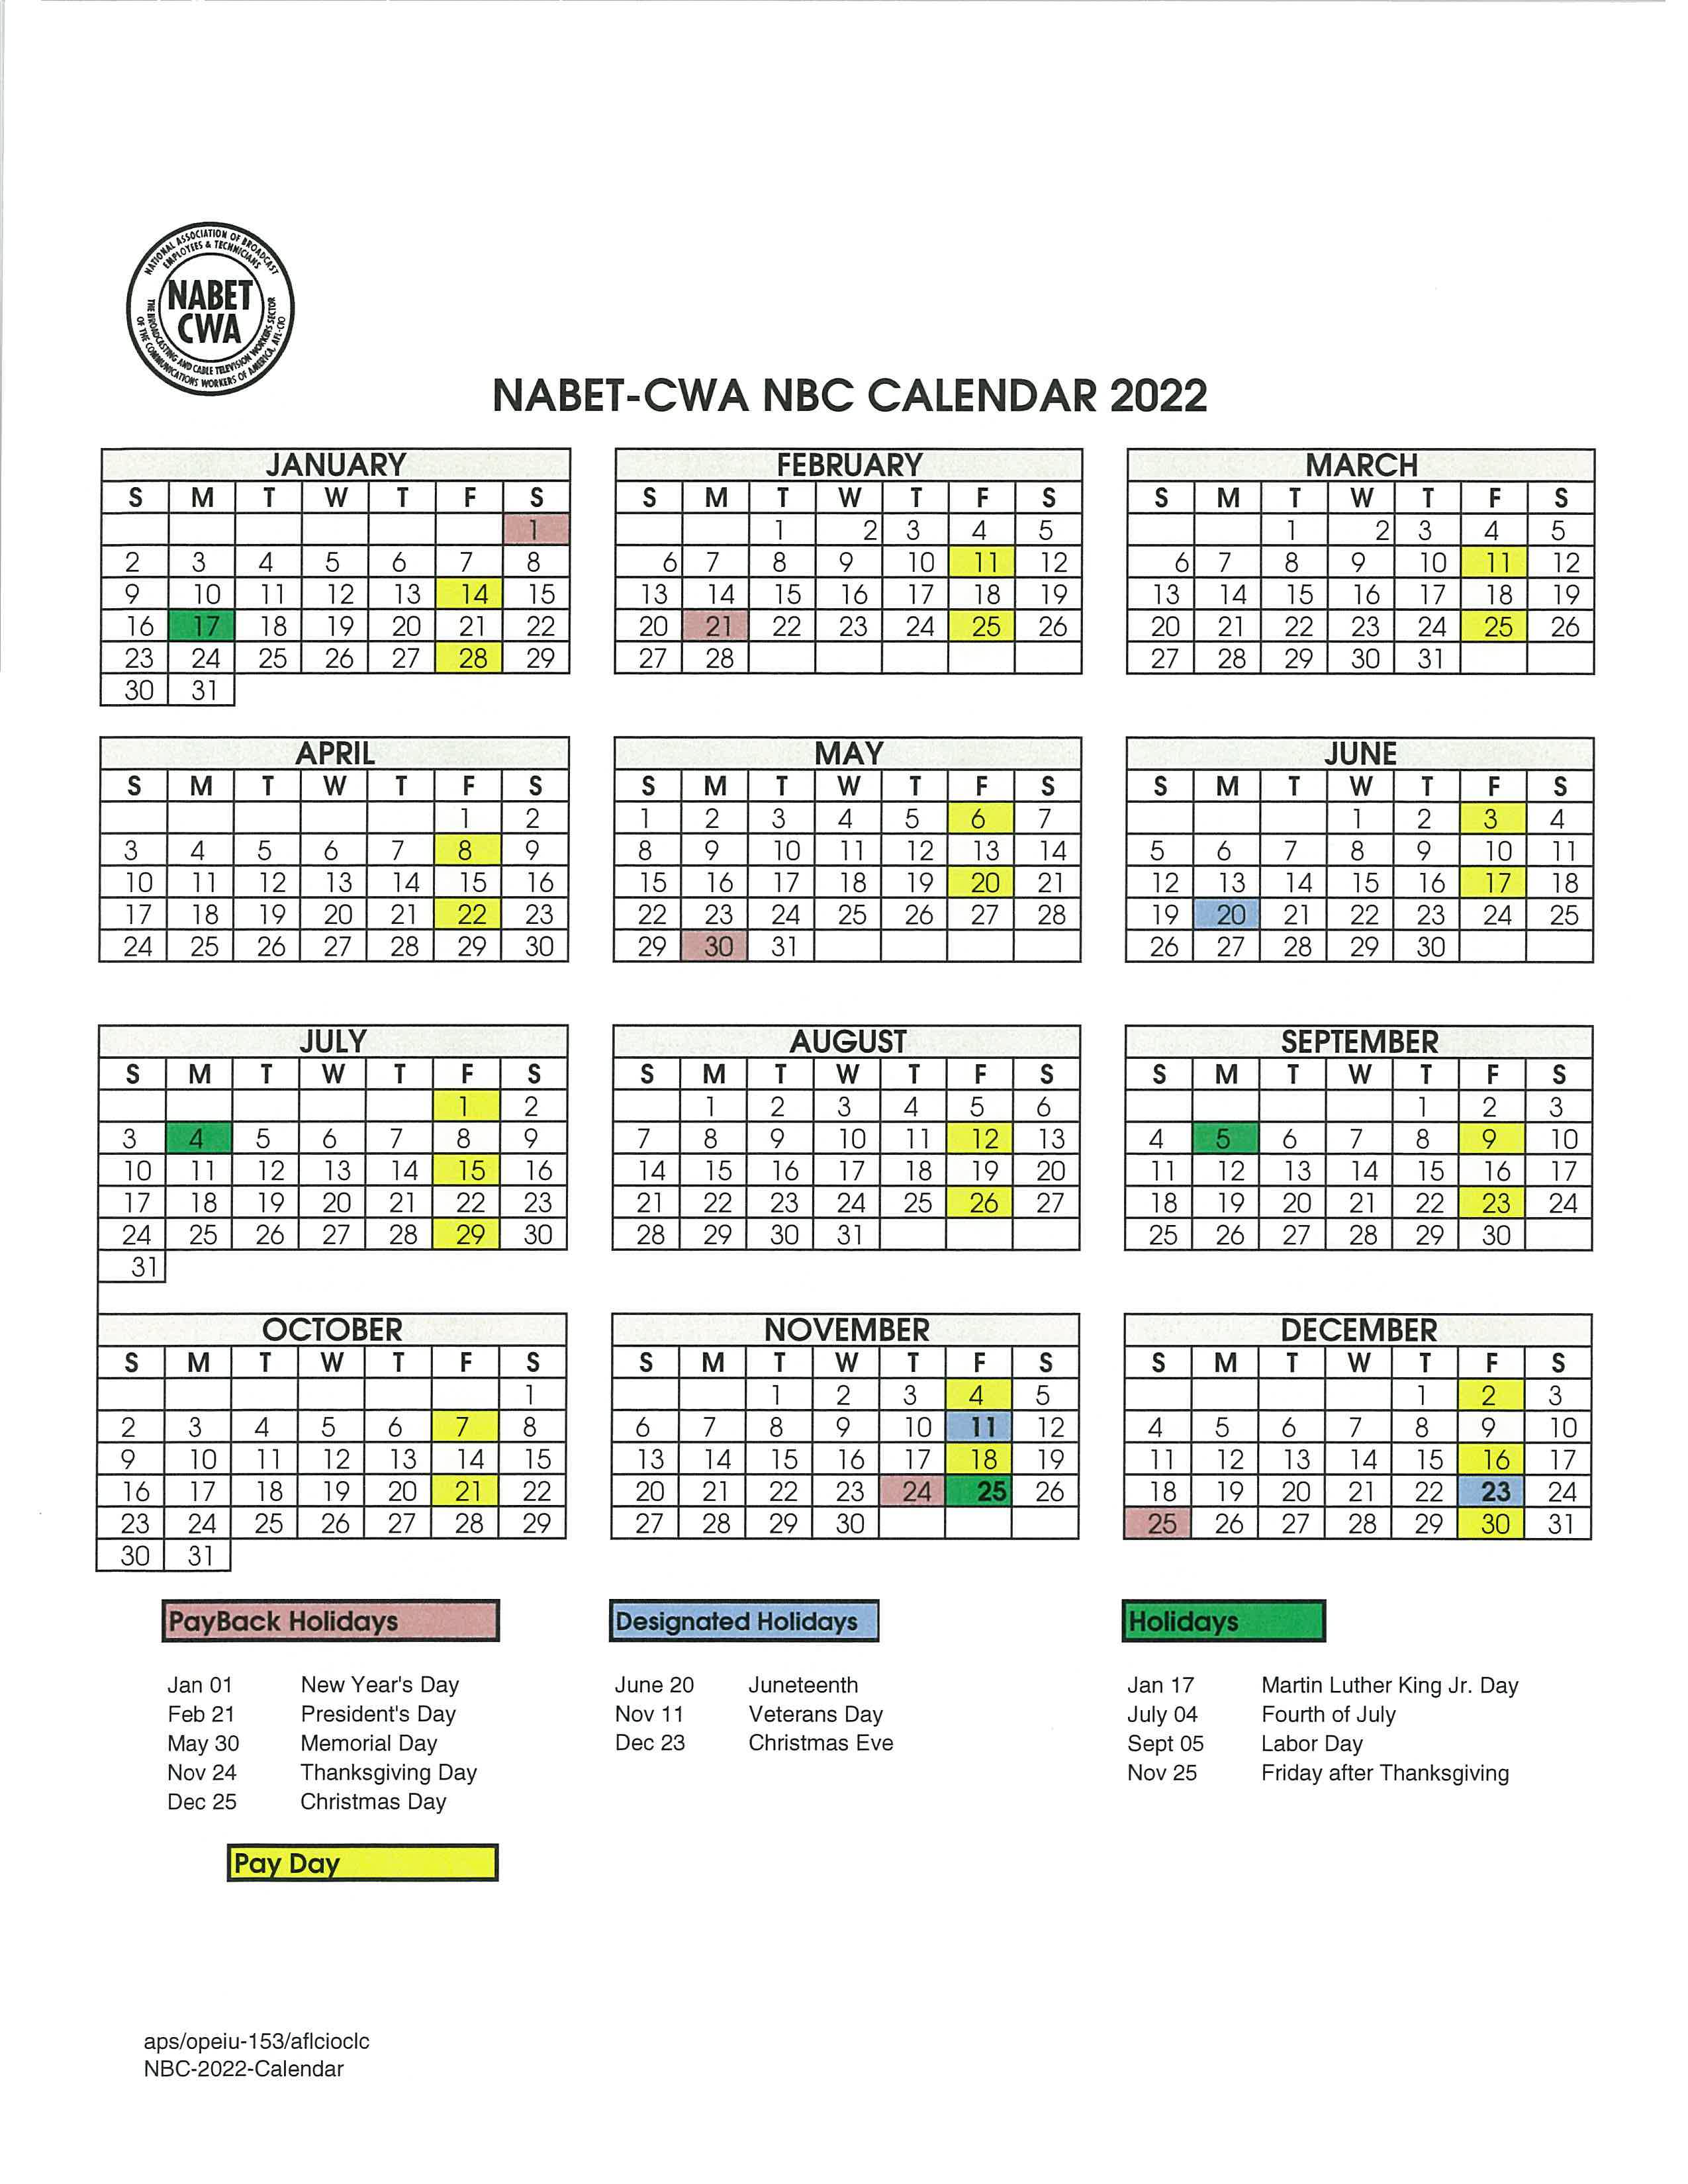 NBC 2022 Vacation Calendar